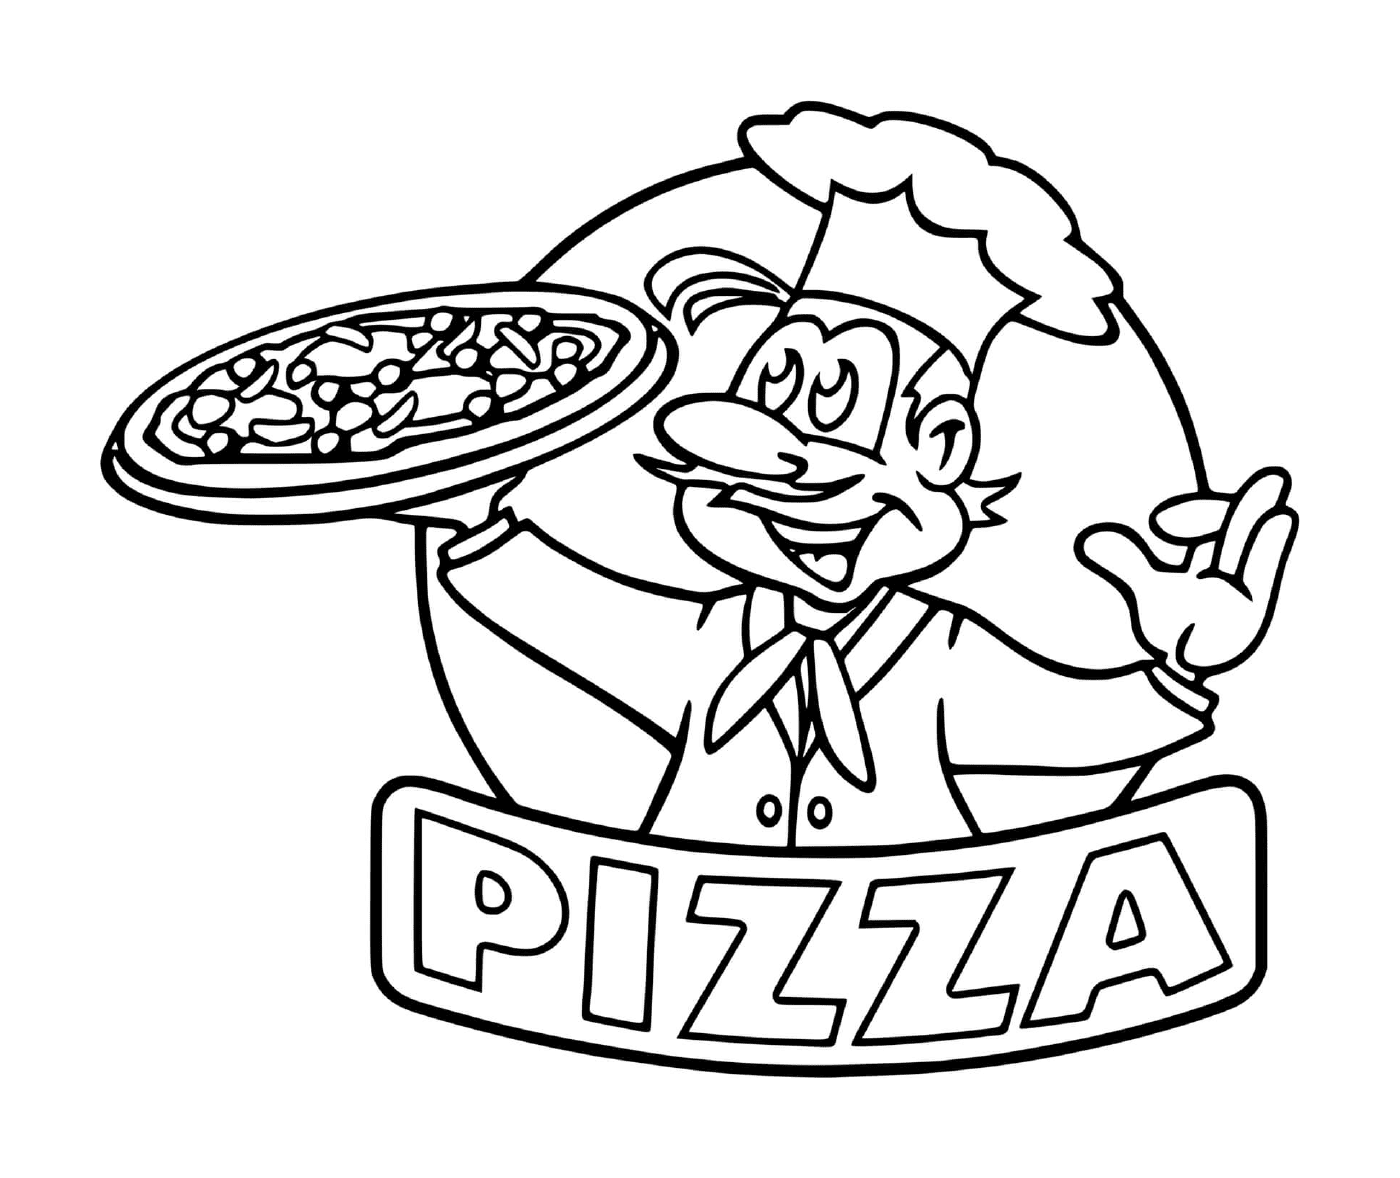  O logotipo do chef do restaurante de pizza 